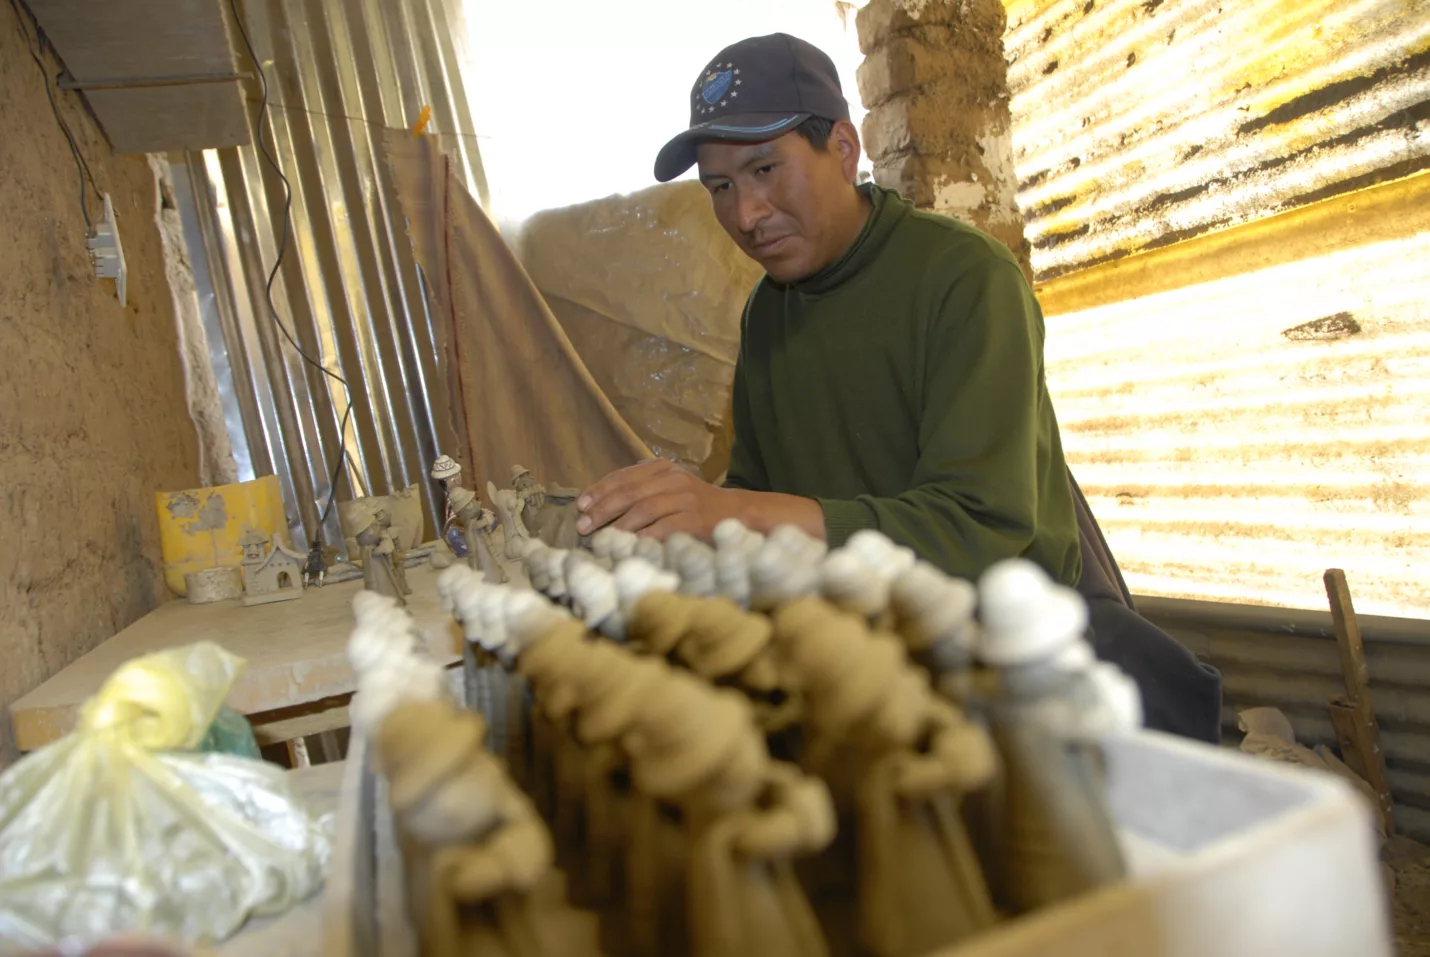 Customer in Bolivia